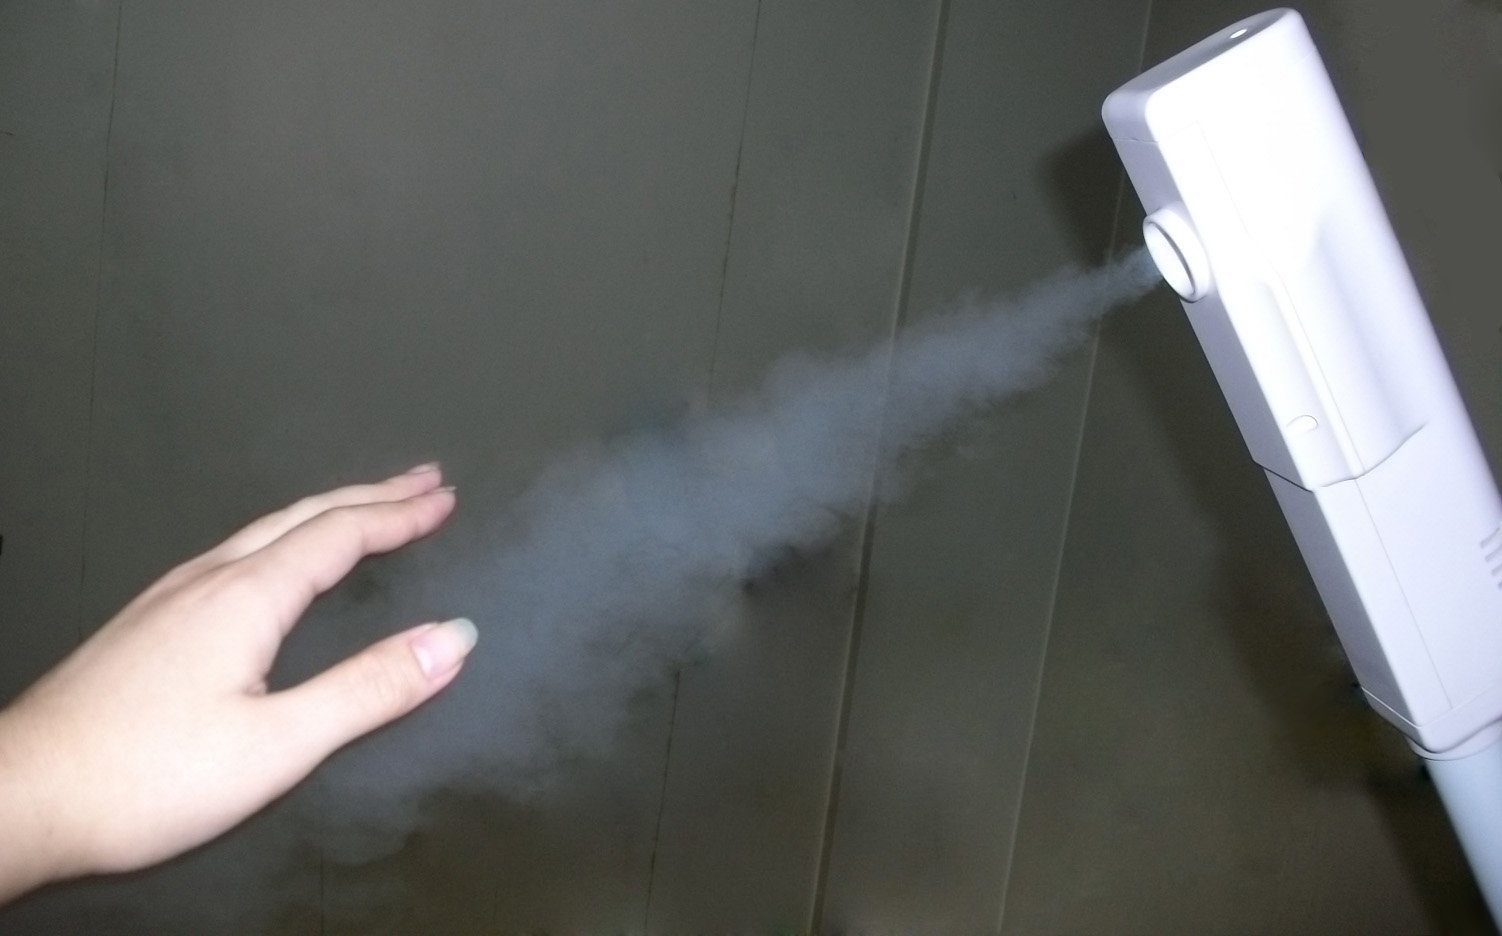 steam spray to my hand